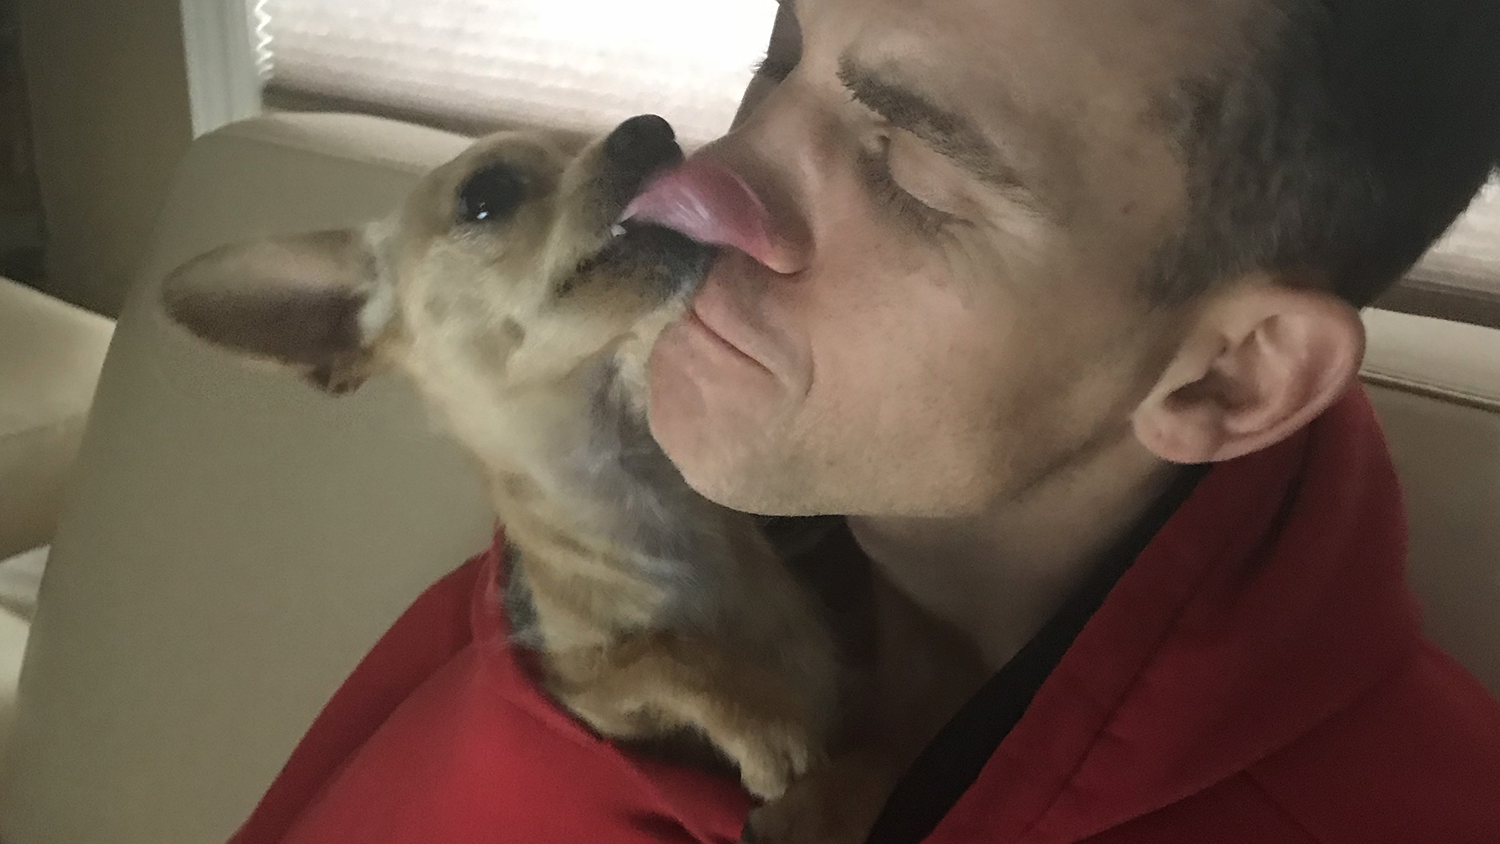 Jeff Kissing Felipe with No Bad Dog Breath